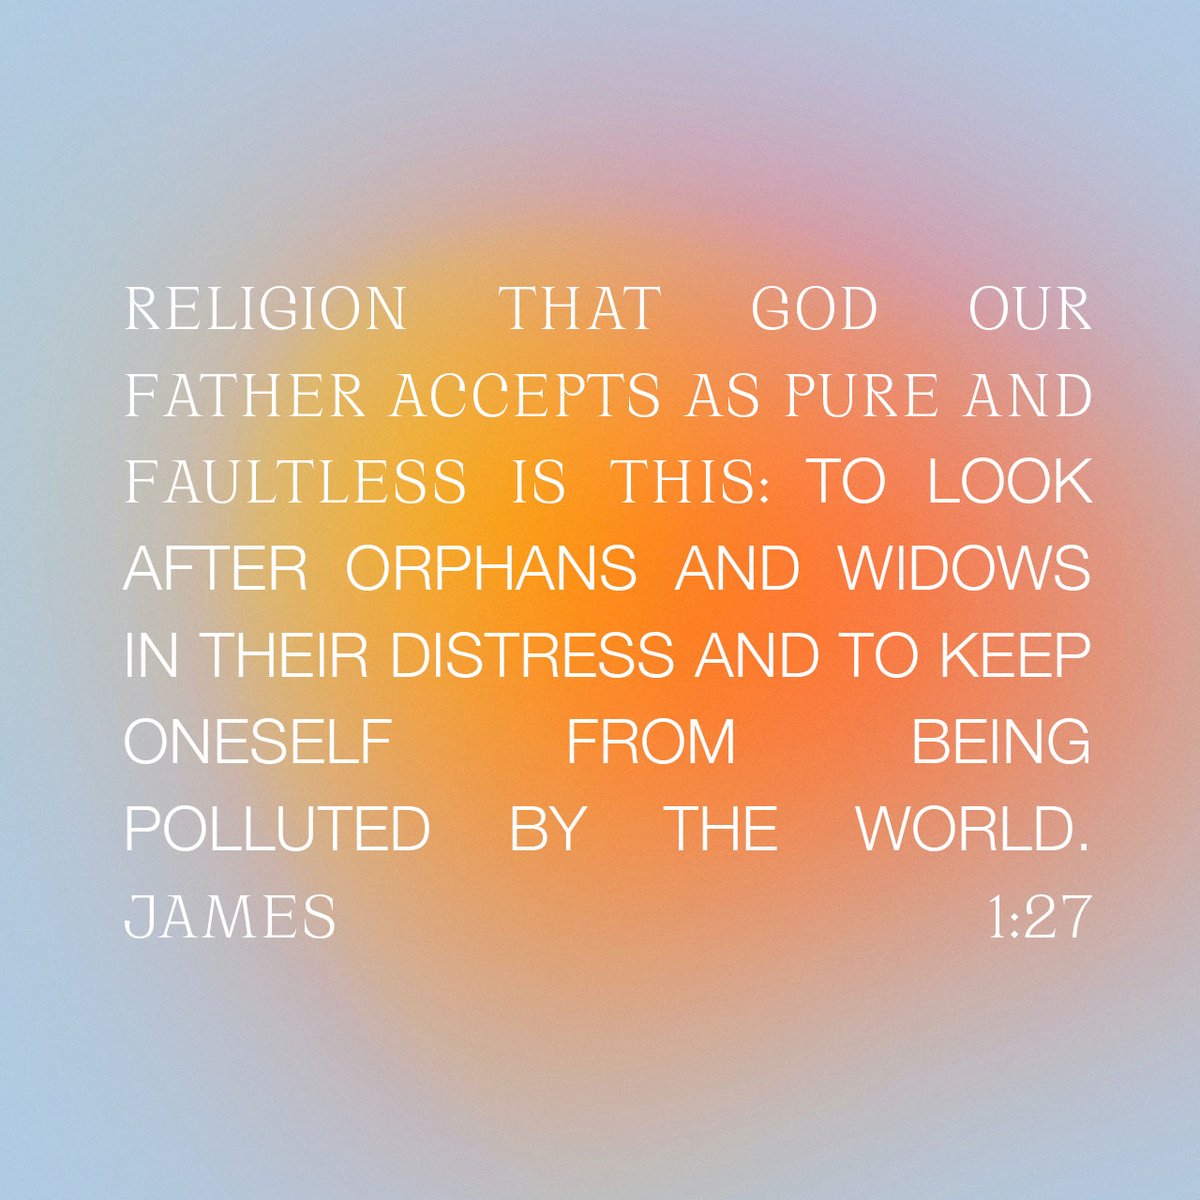 Daily Verse - James 1:27